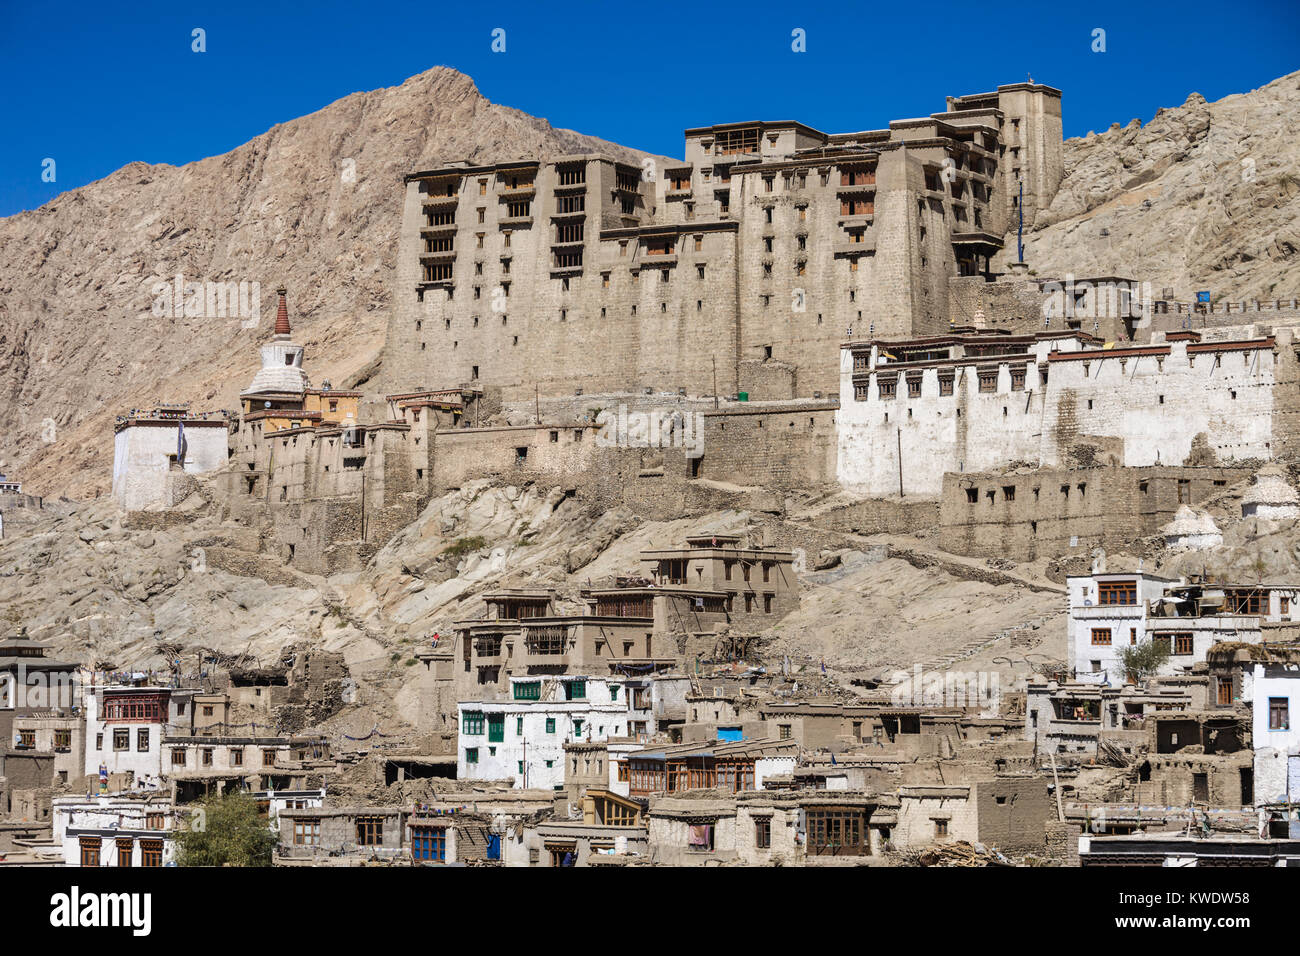 Landmarks in the center of Leh, Ladakh, India. Stock Photo